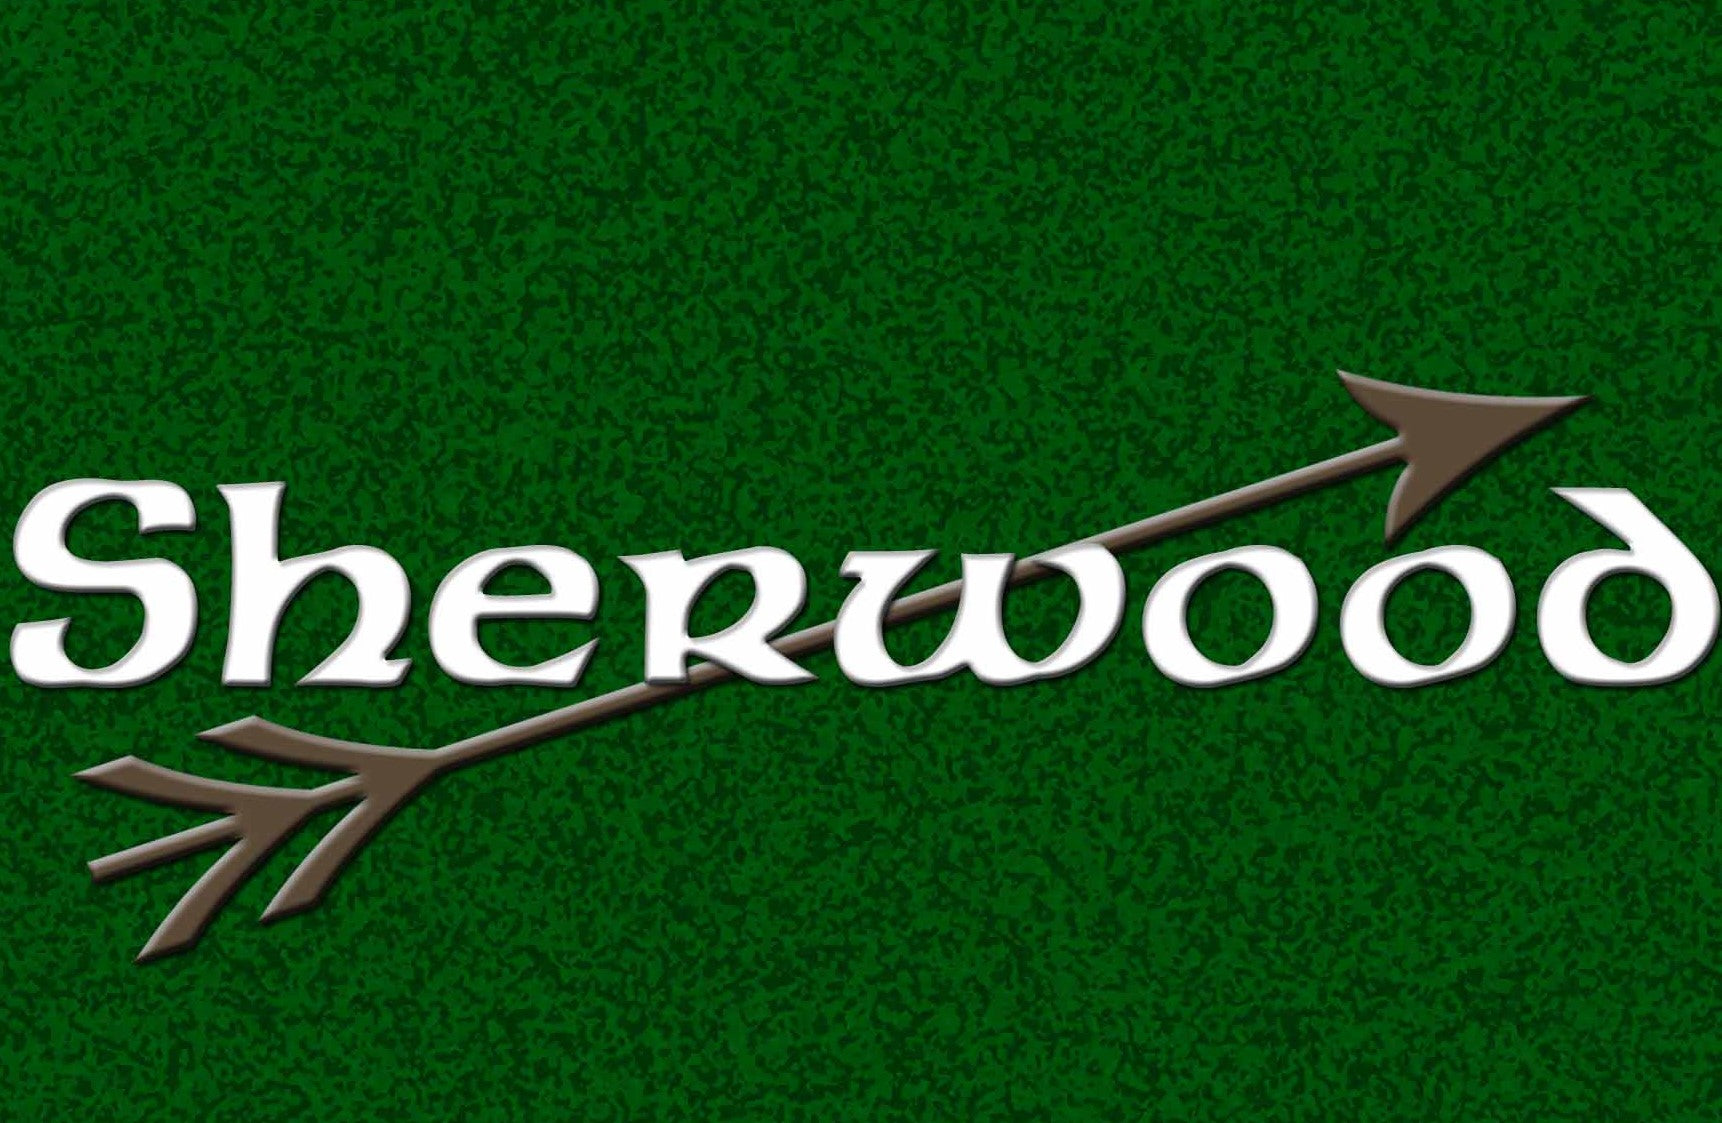 sherwood